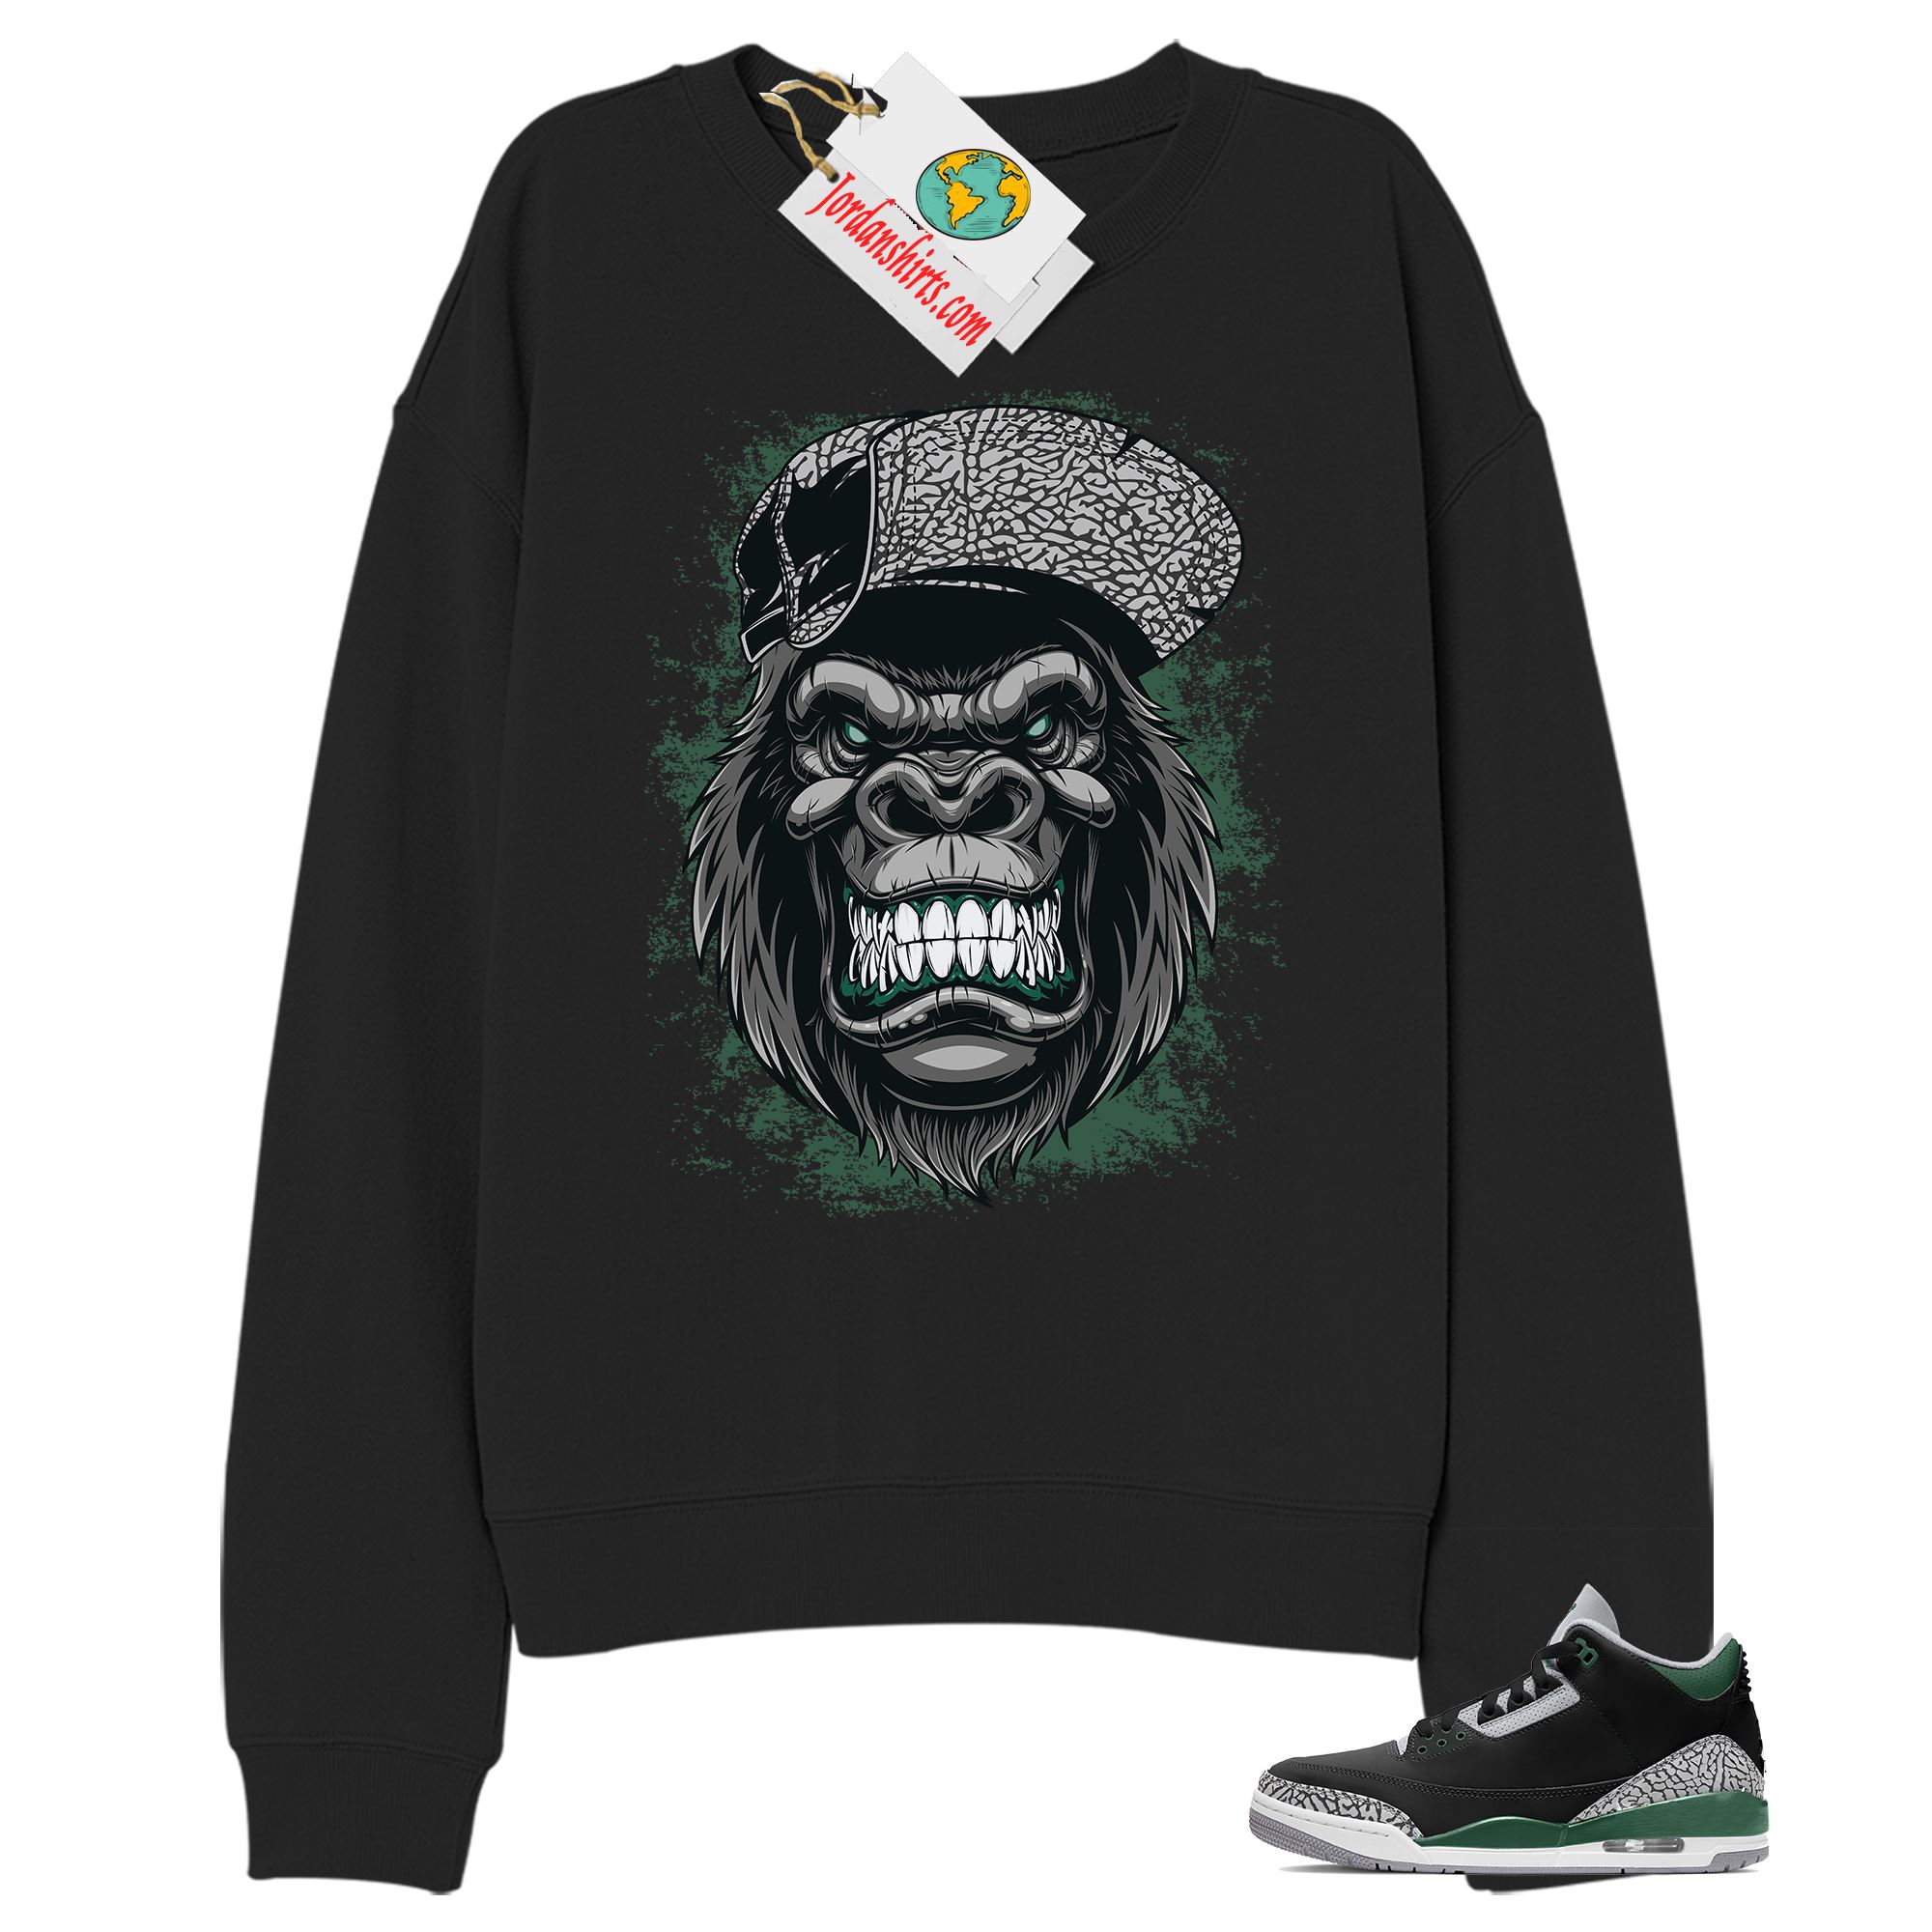 Jordan 3 Sweatshirt, Ferocious Gorilla Black Sweatshirt Air Jordan 3 Pine Green 3s Full Size Up To 5xl